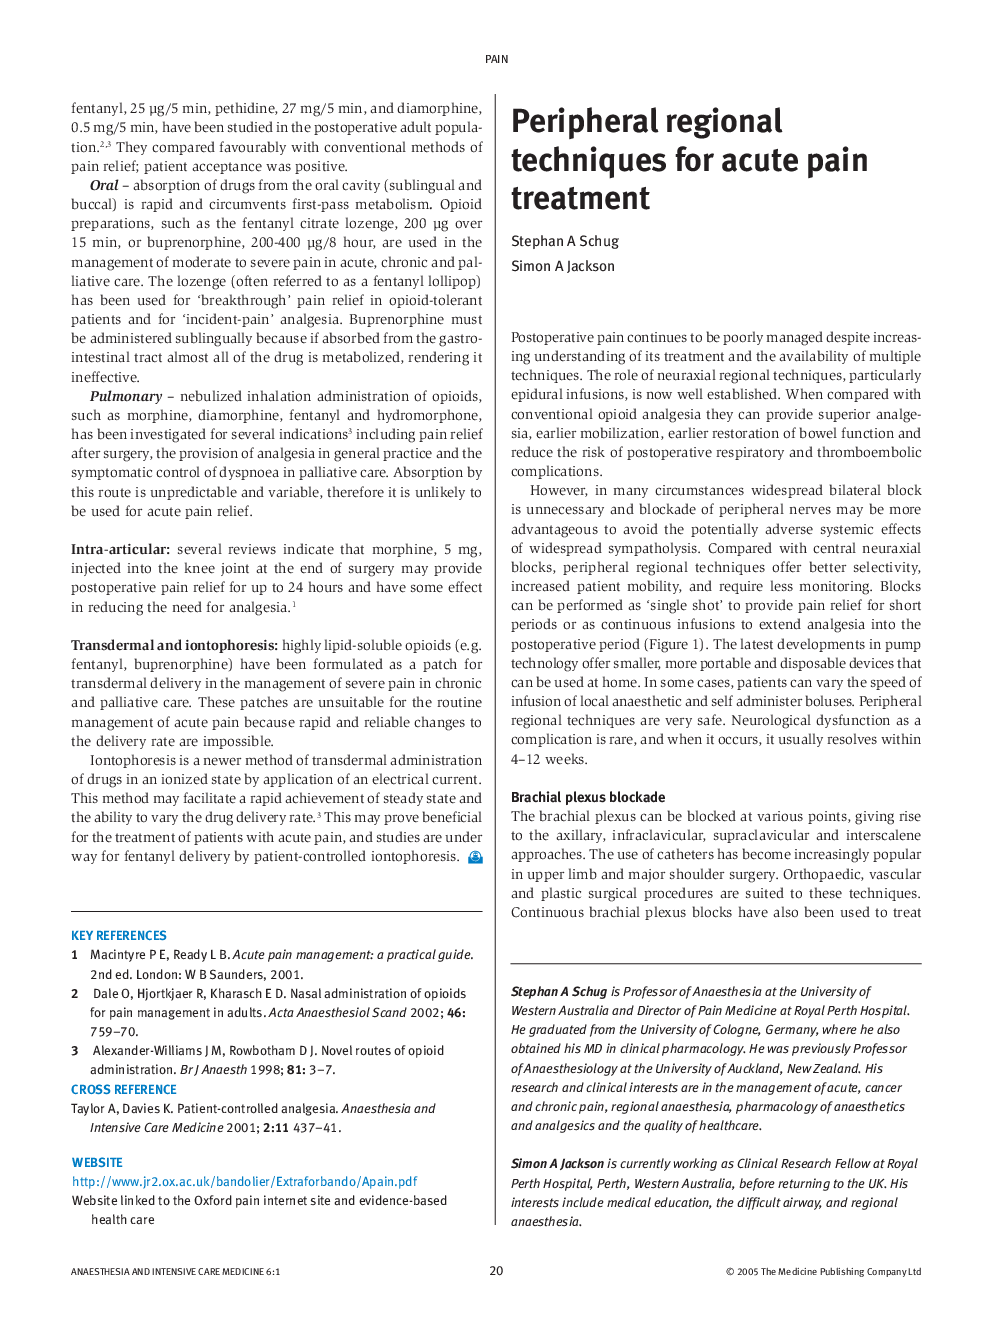 Peripheral regional techniques for acute pain treatment